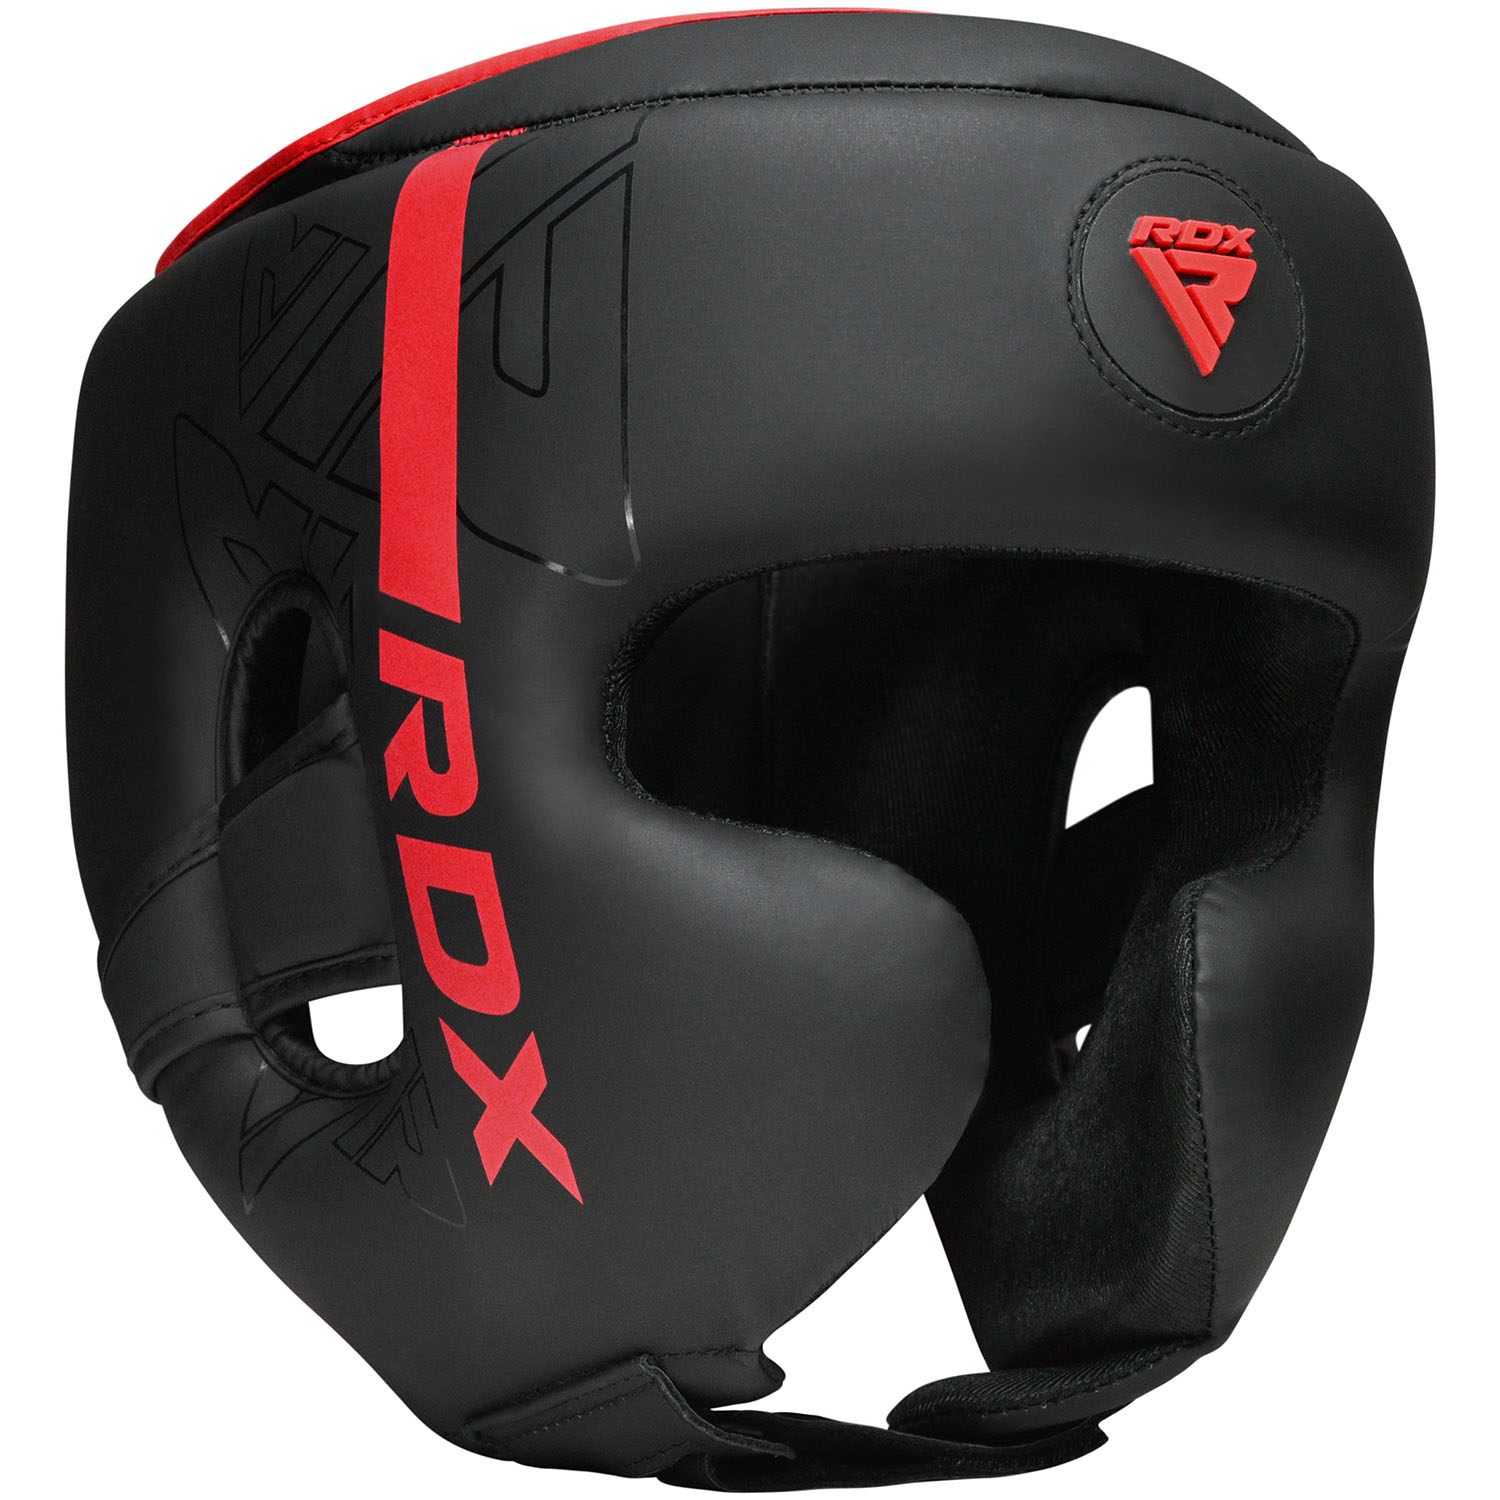 RDX Kopfschutz, Kara Series F6, schwarz-rot